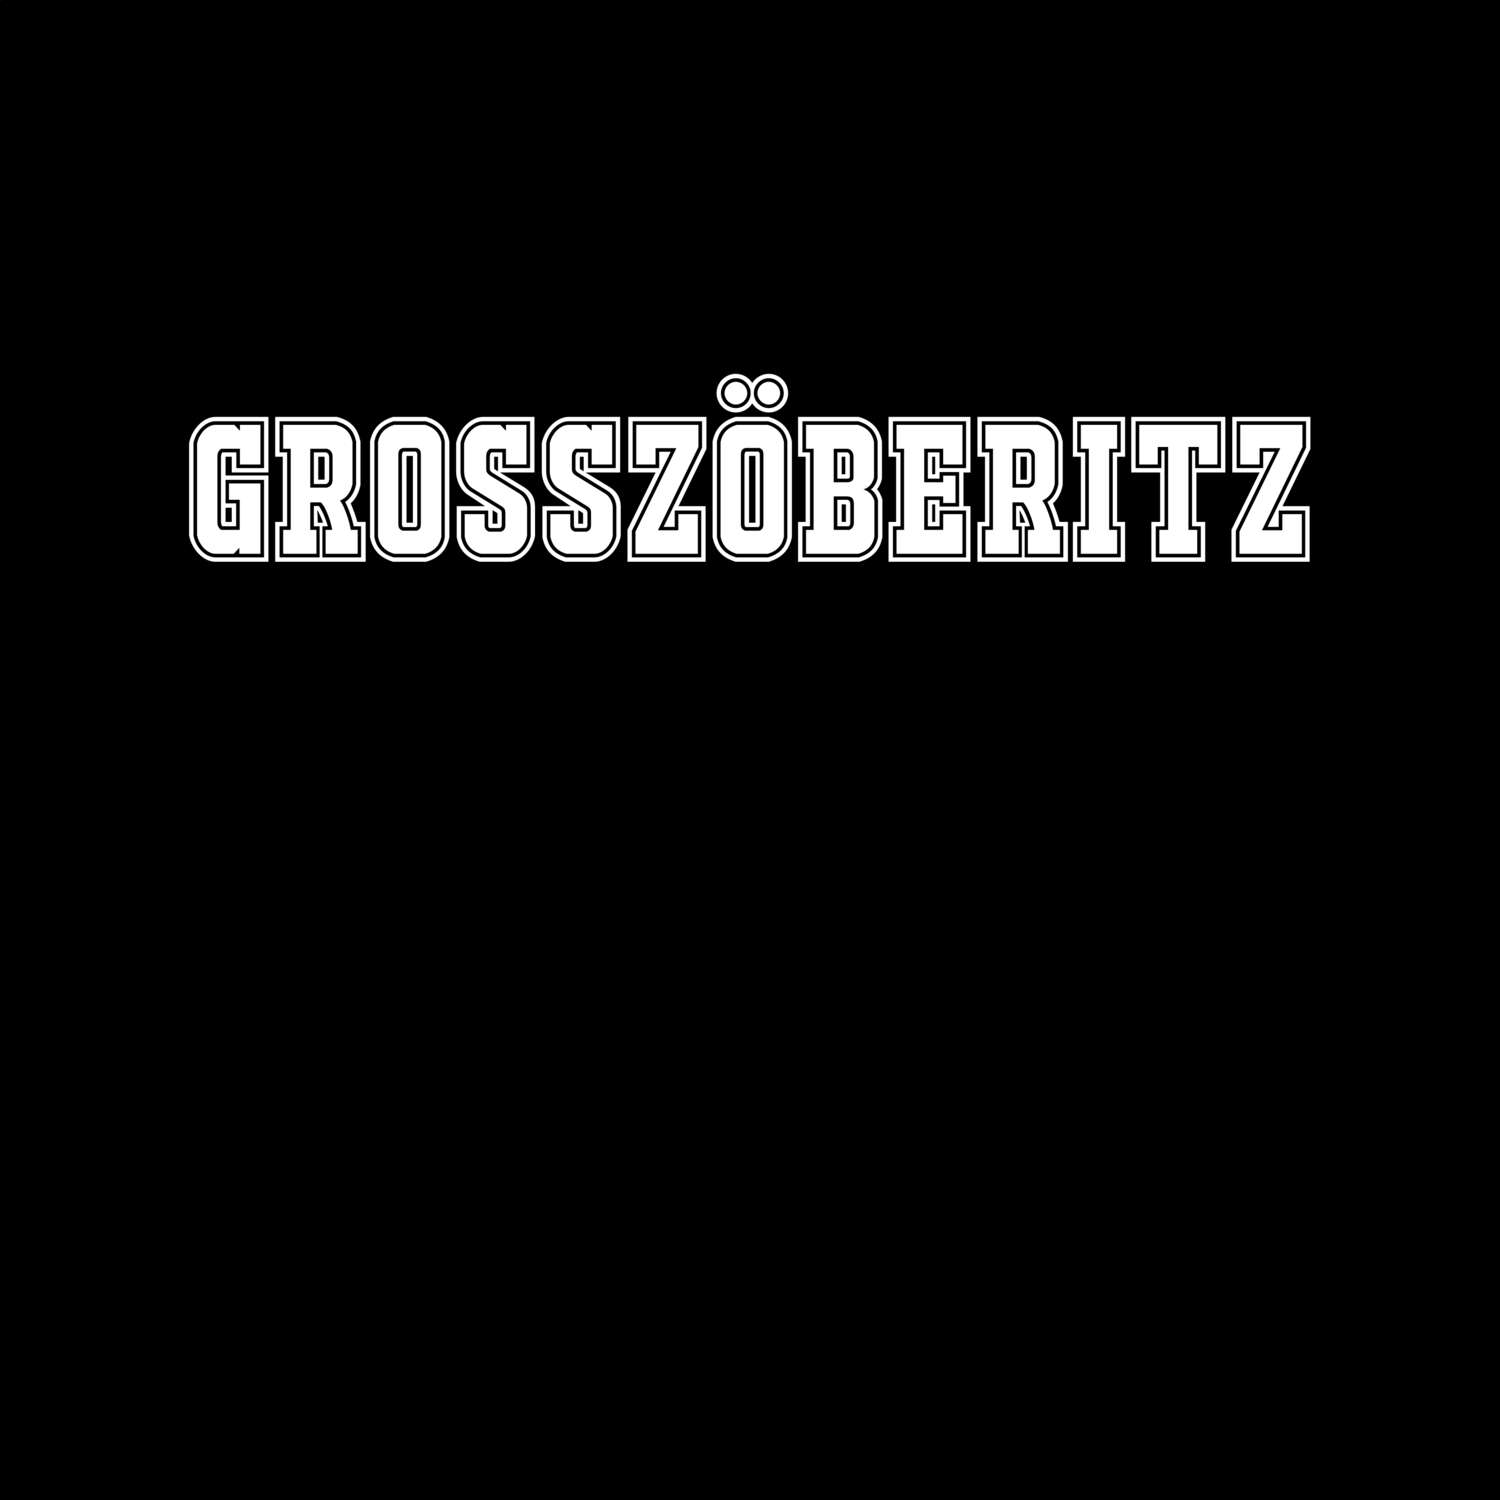 Großzöberitz T-Shirt »Classic«